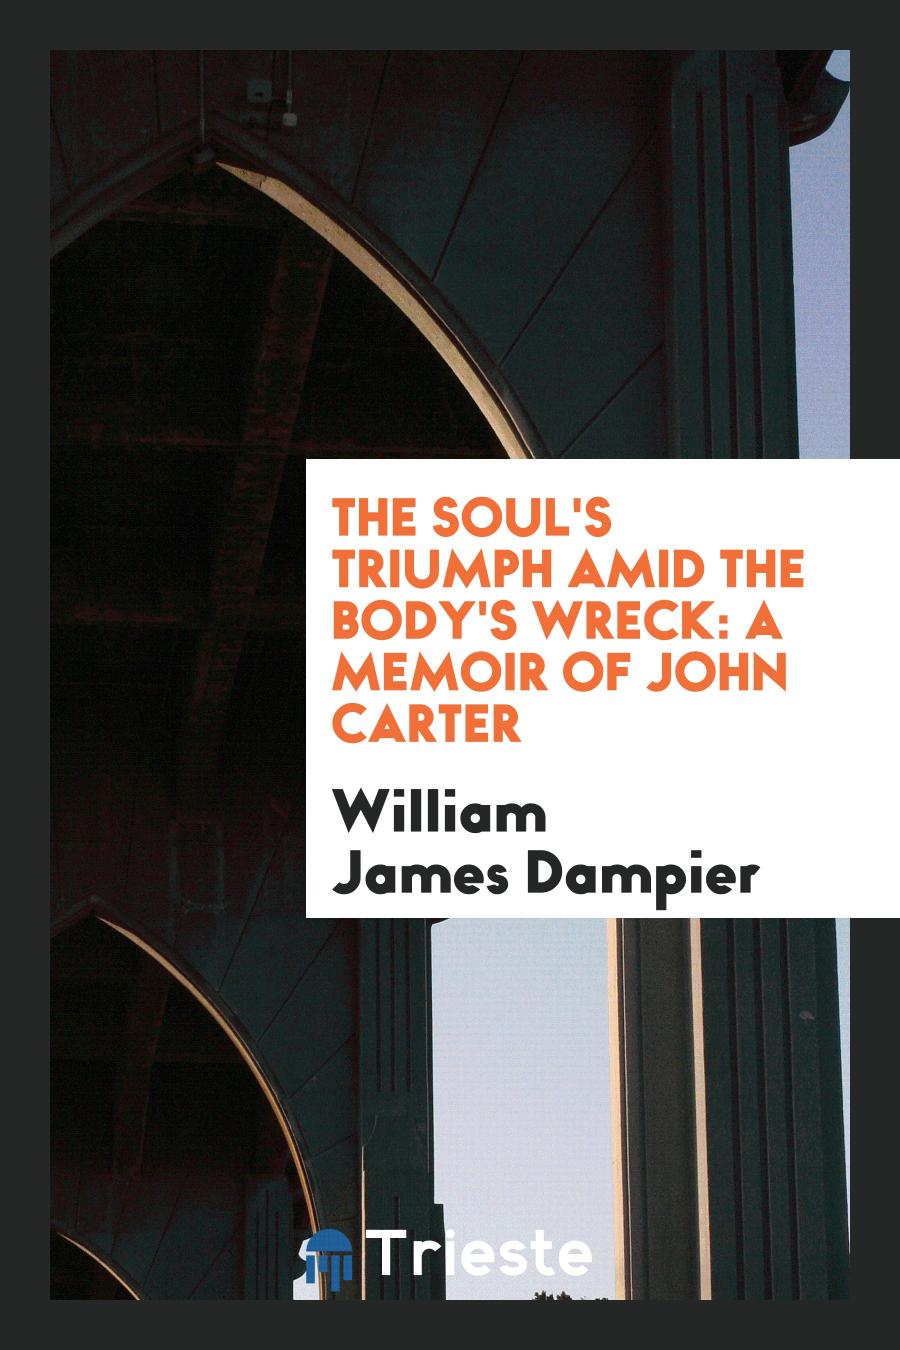 The Soul's triumph amid the body's wreck: a memoir of John Carter